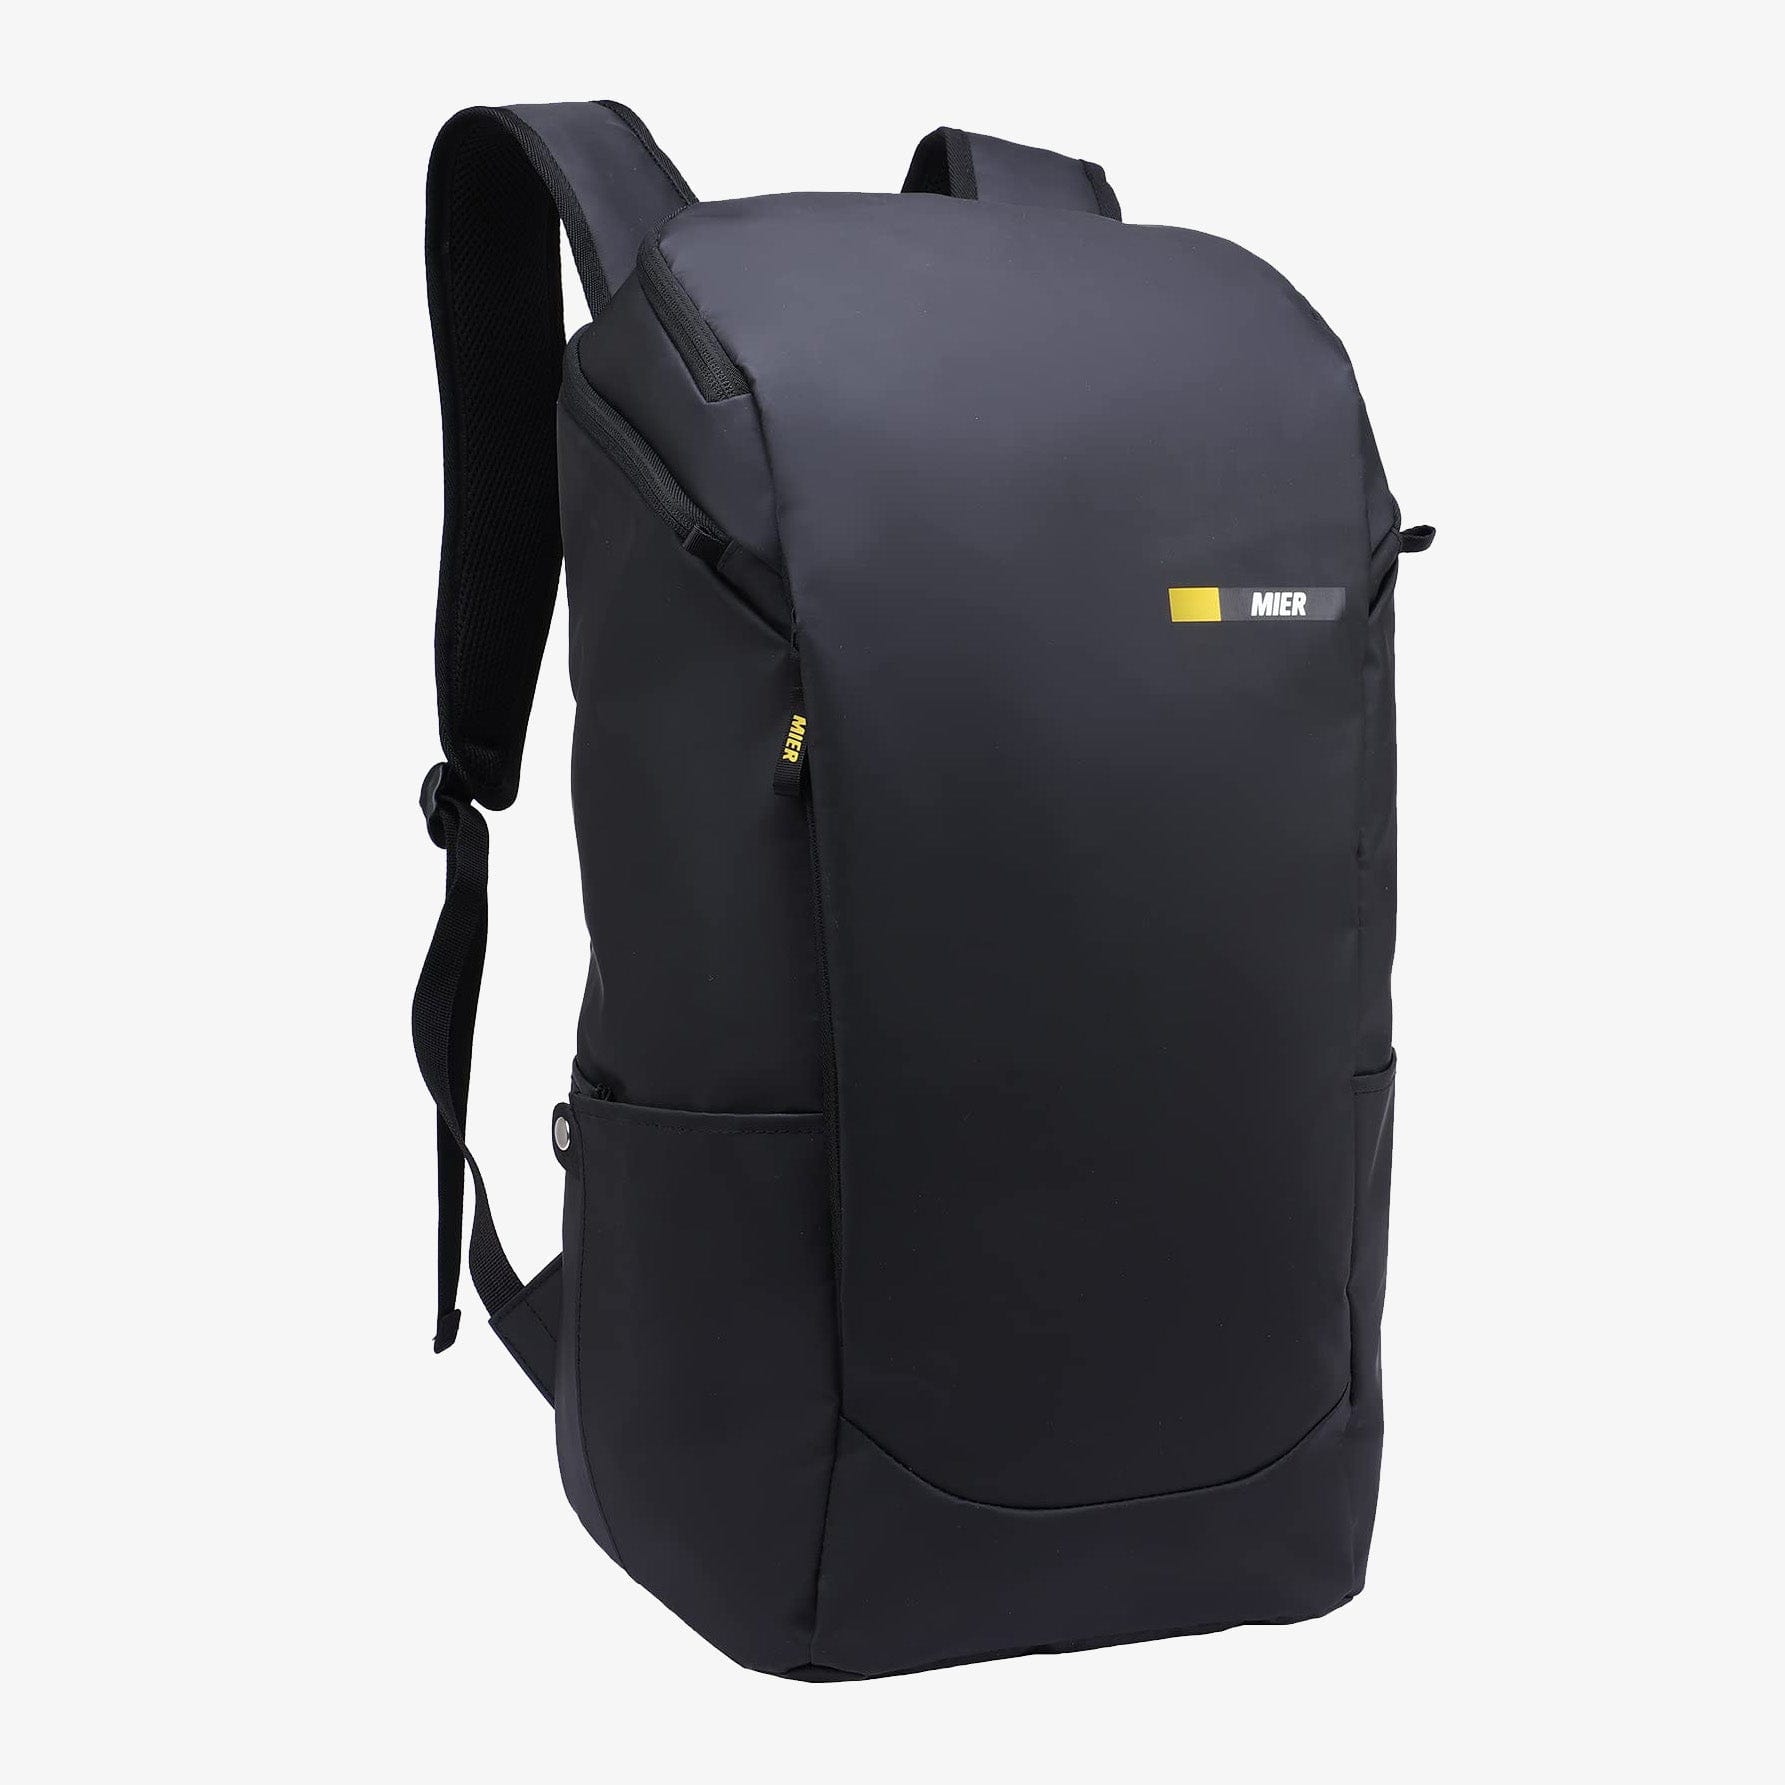 Casual Daypack Water Resistant Travel Laptop Backpack Backpack Bag Black MIER